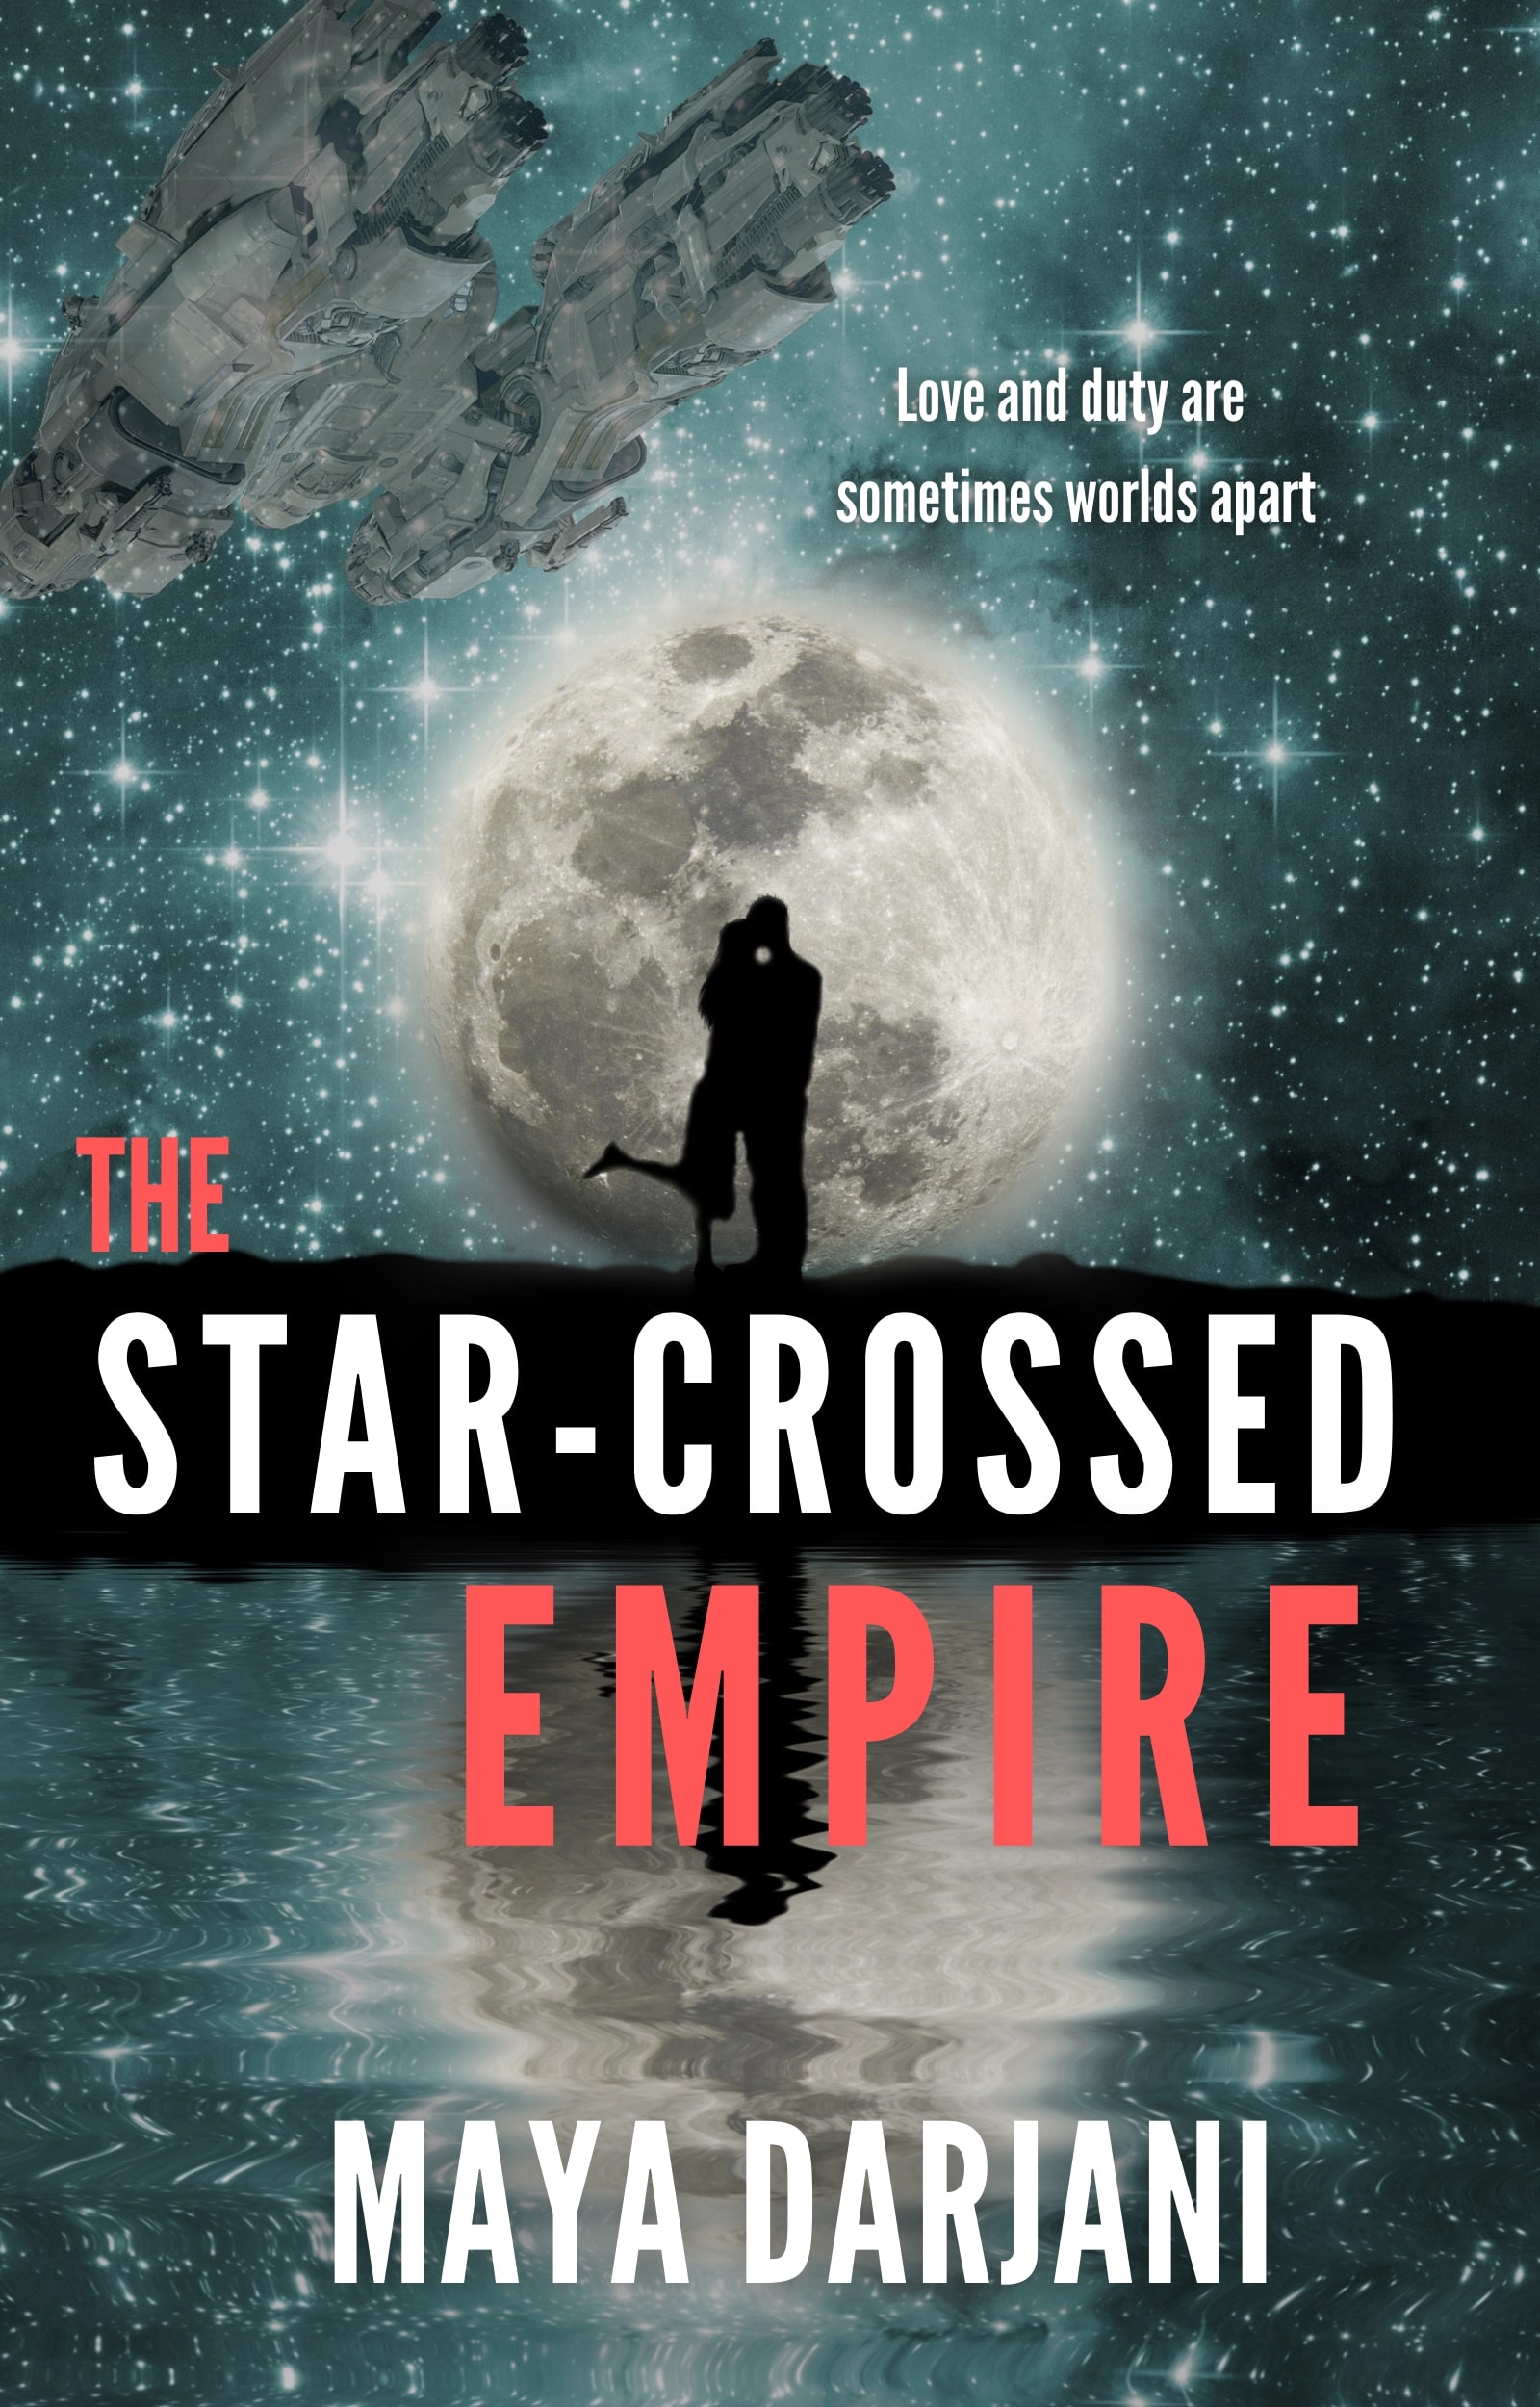 The Star-Crossed Empire, by Maya Darjani